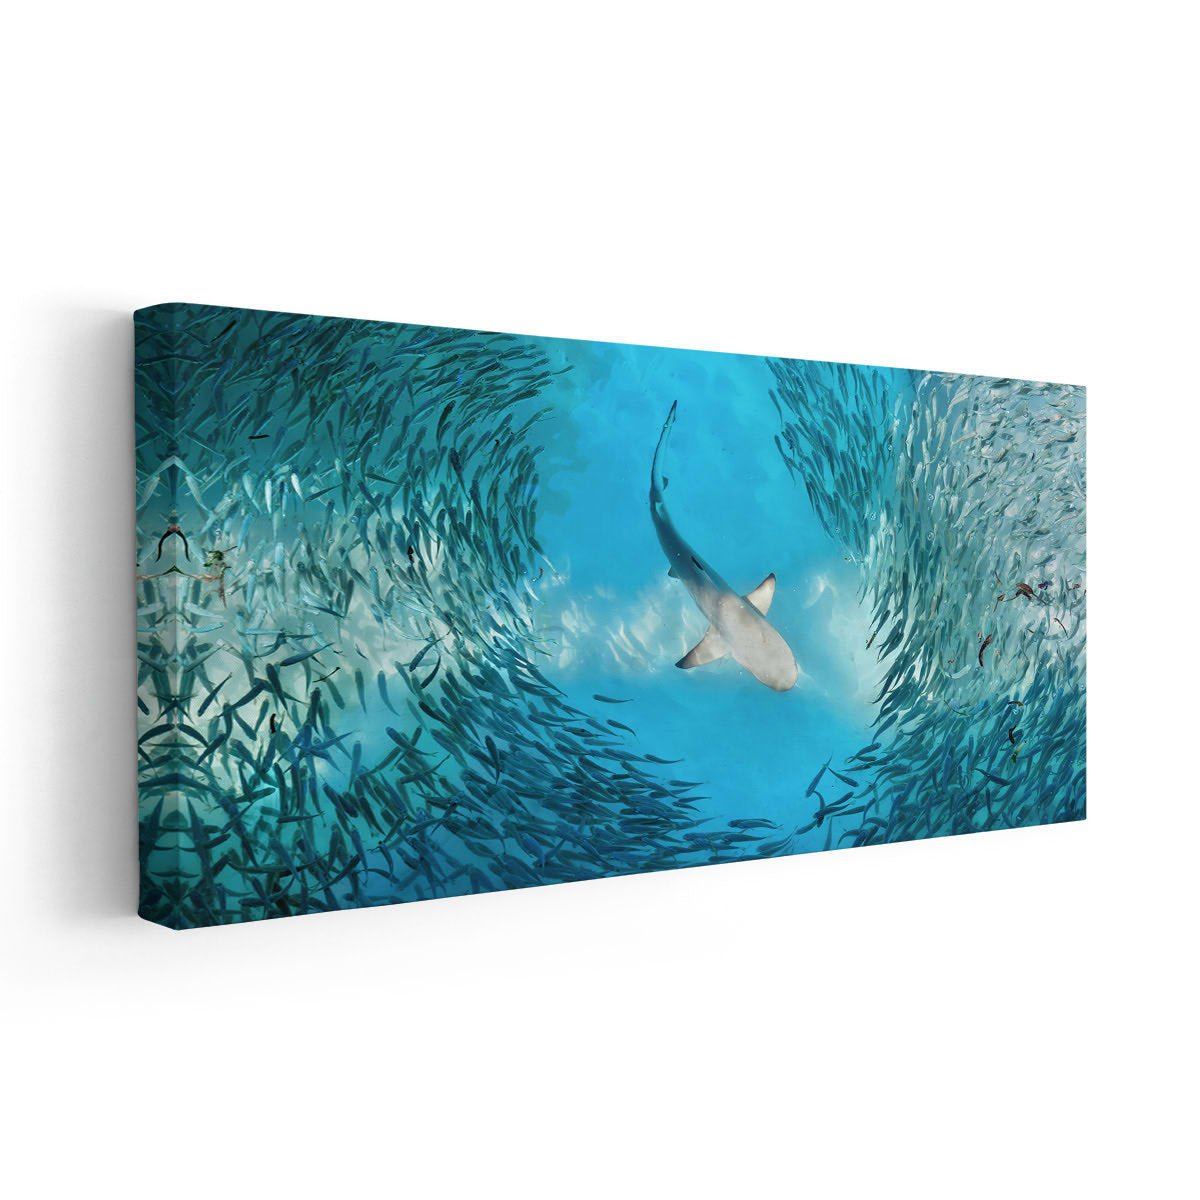 Shark Hunting Wall Art Canvas-Stunning Canvas Prints